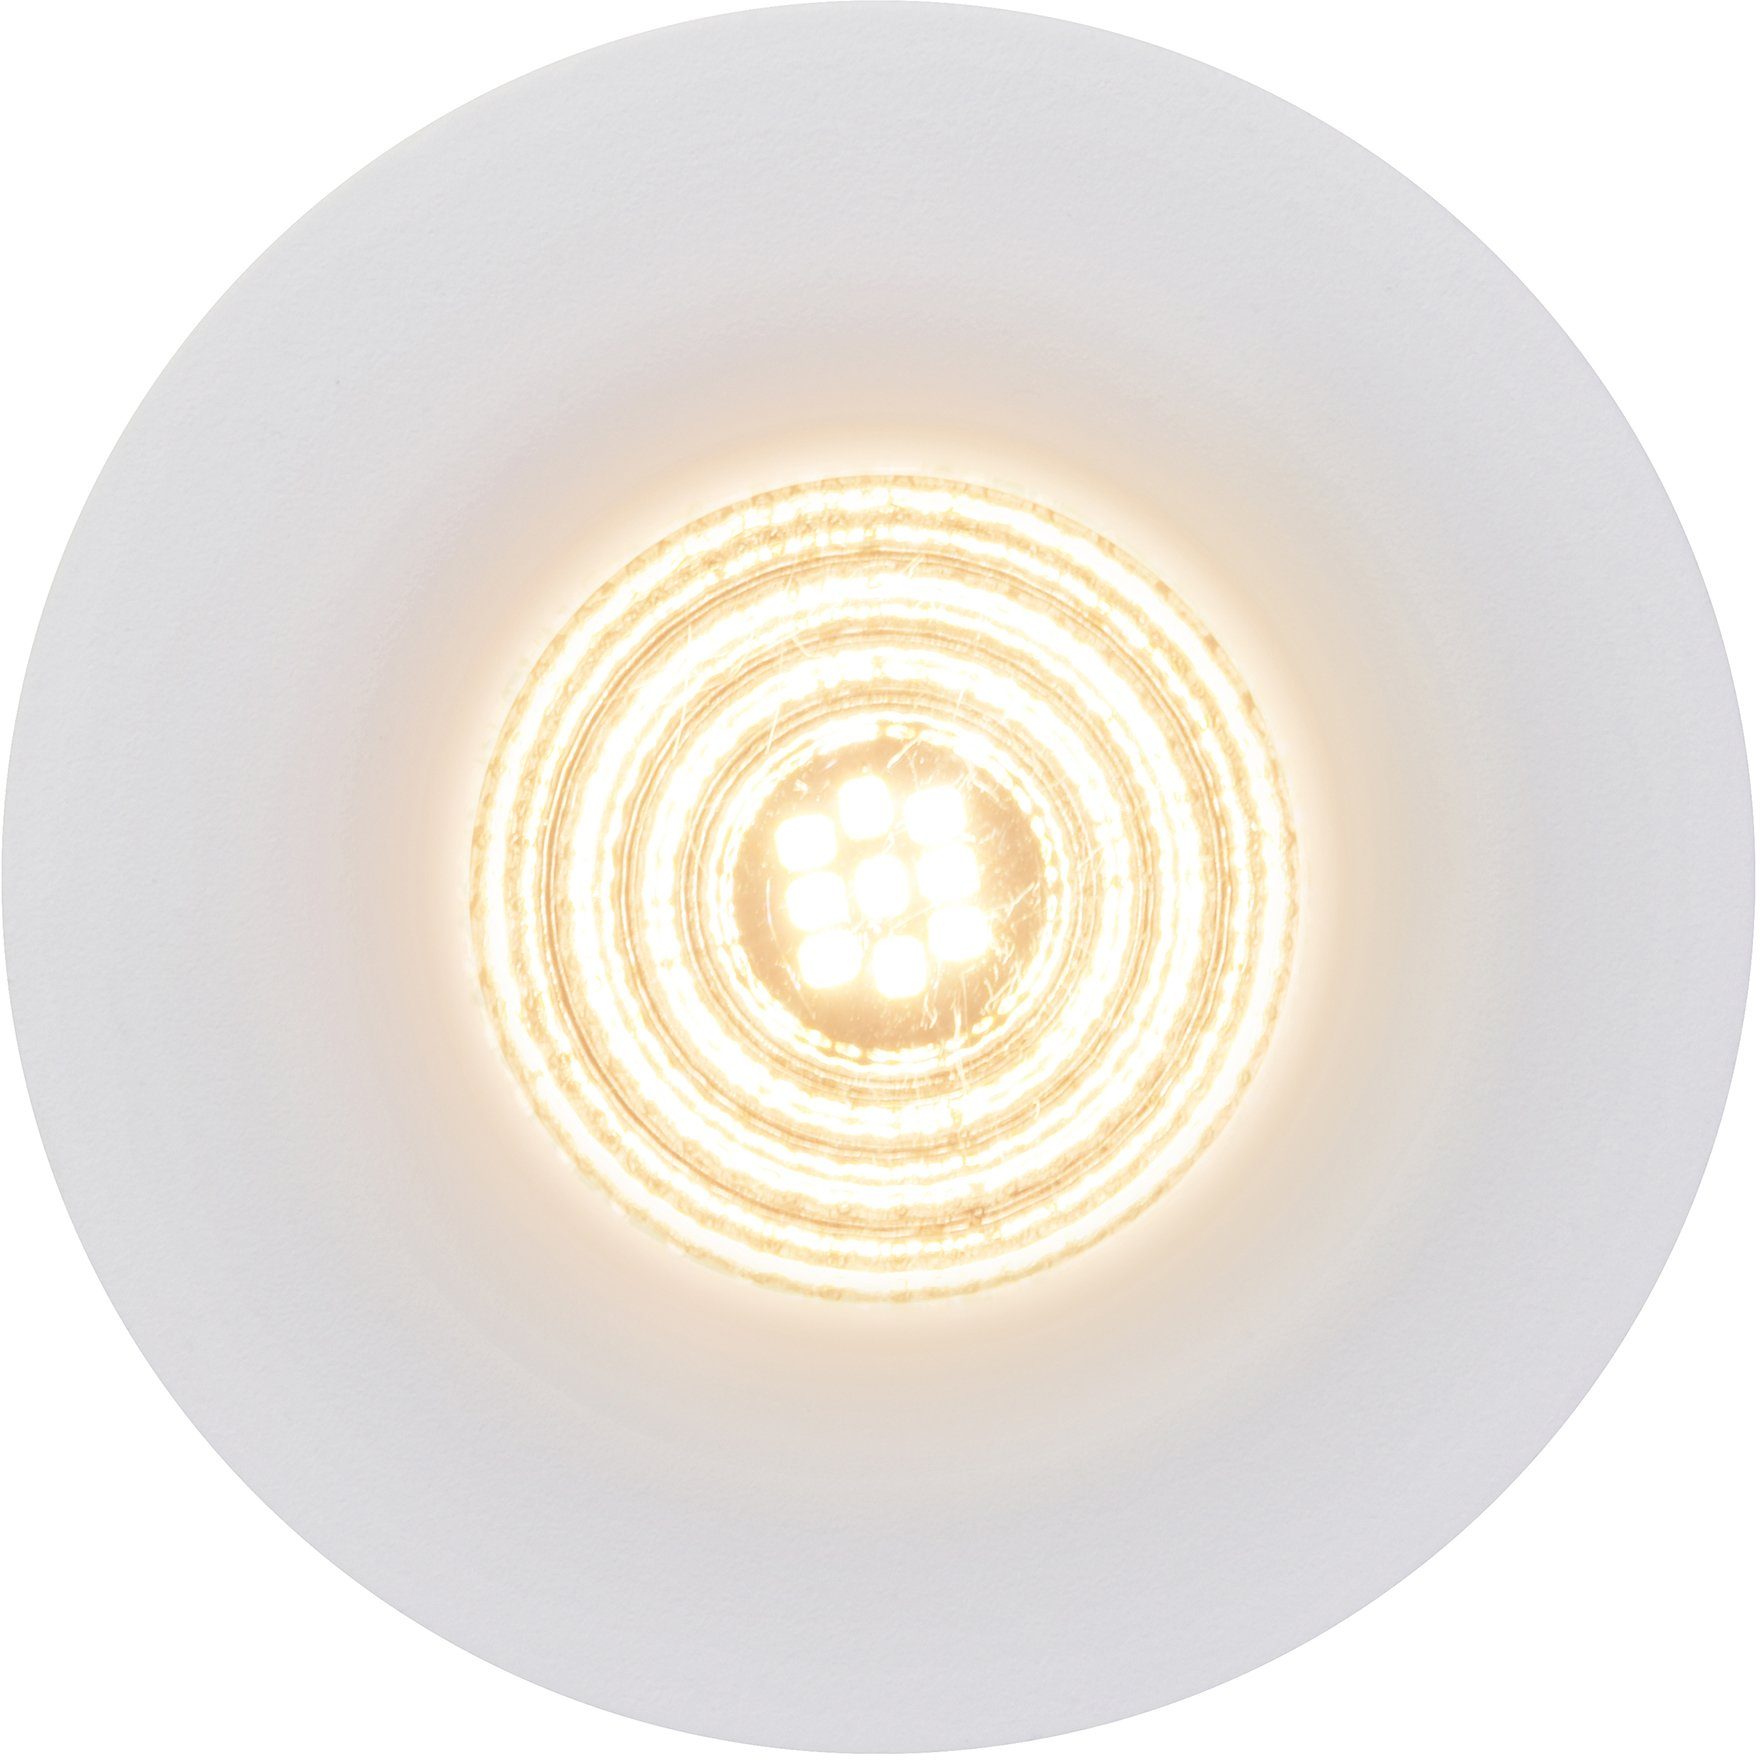 Nordlux Deckenstrahler Warmweiß, LED, fest inkl. 450 Lumen, Starke, integriert, 6,1W LED Dimmbar